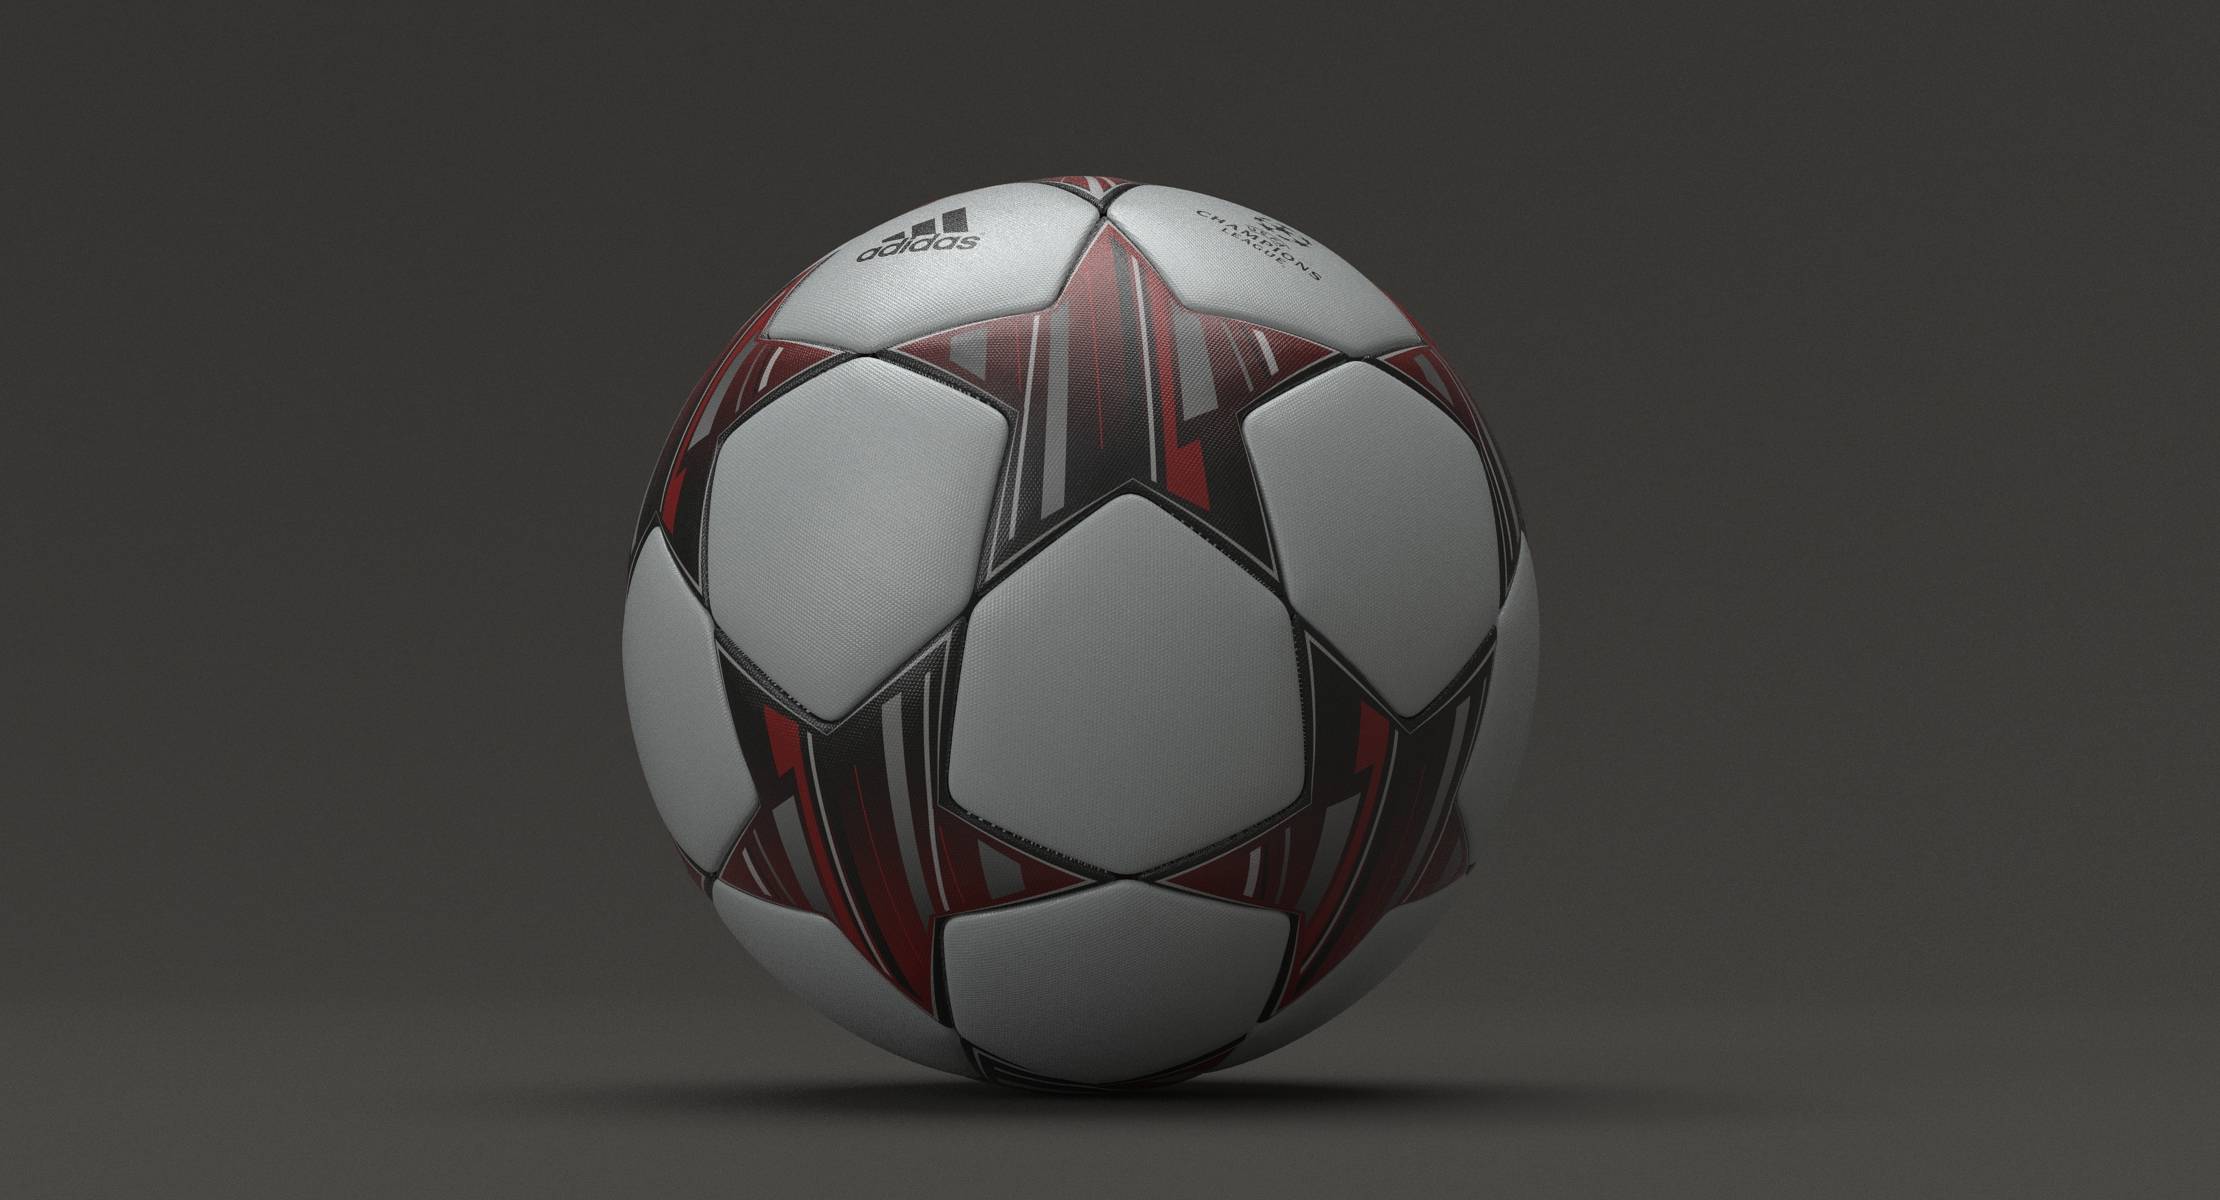 Adidas Finale Soccer Ball